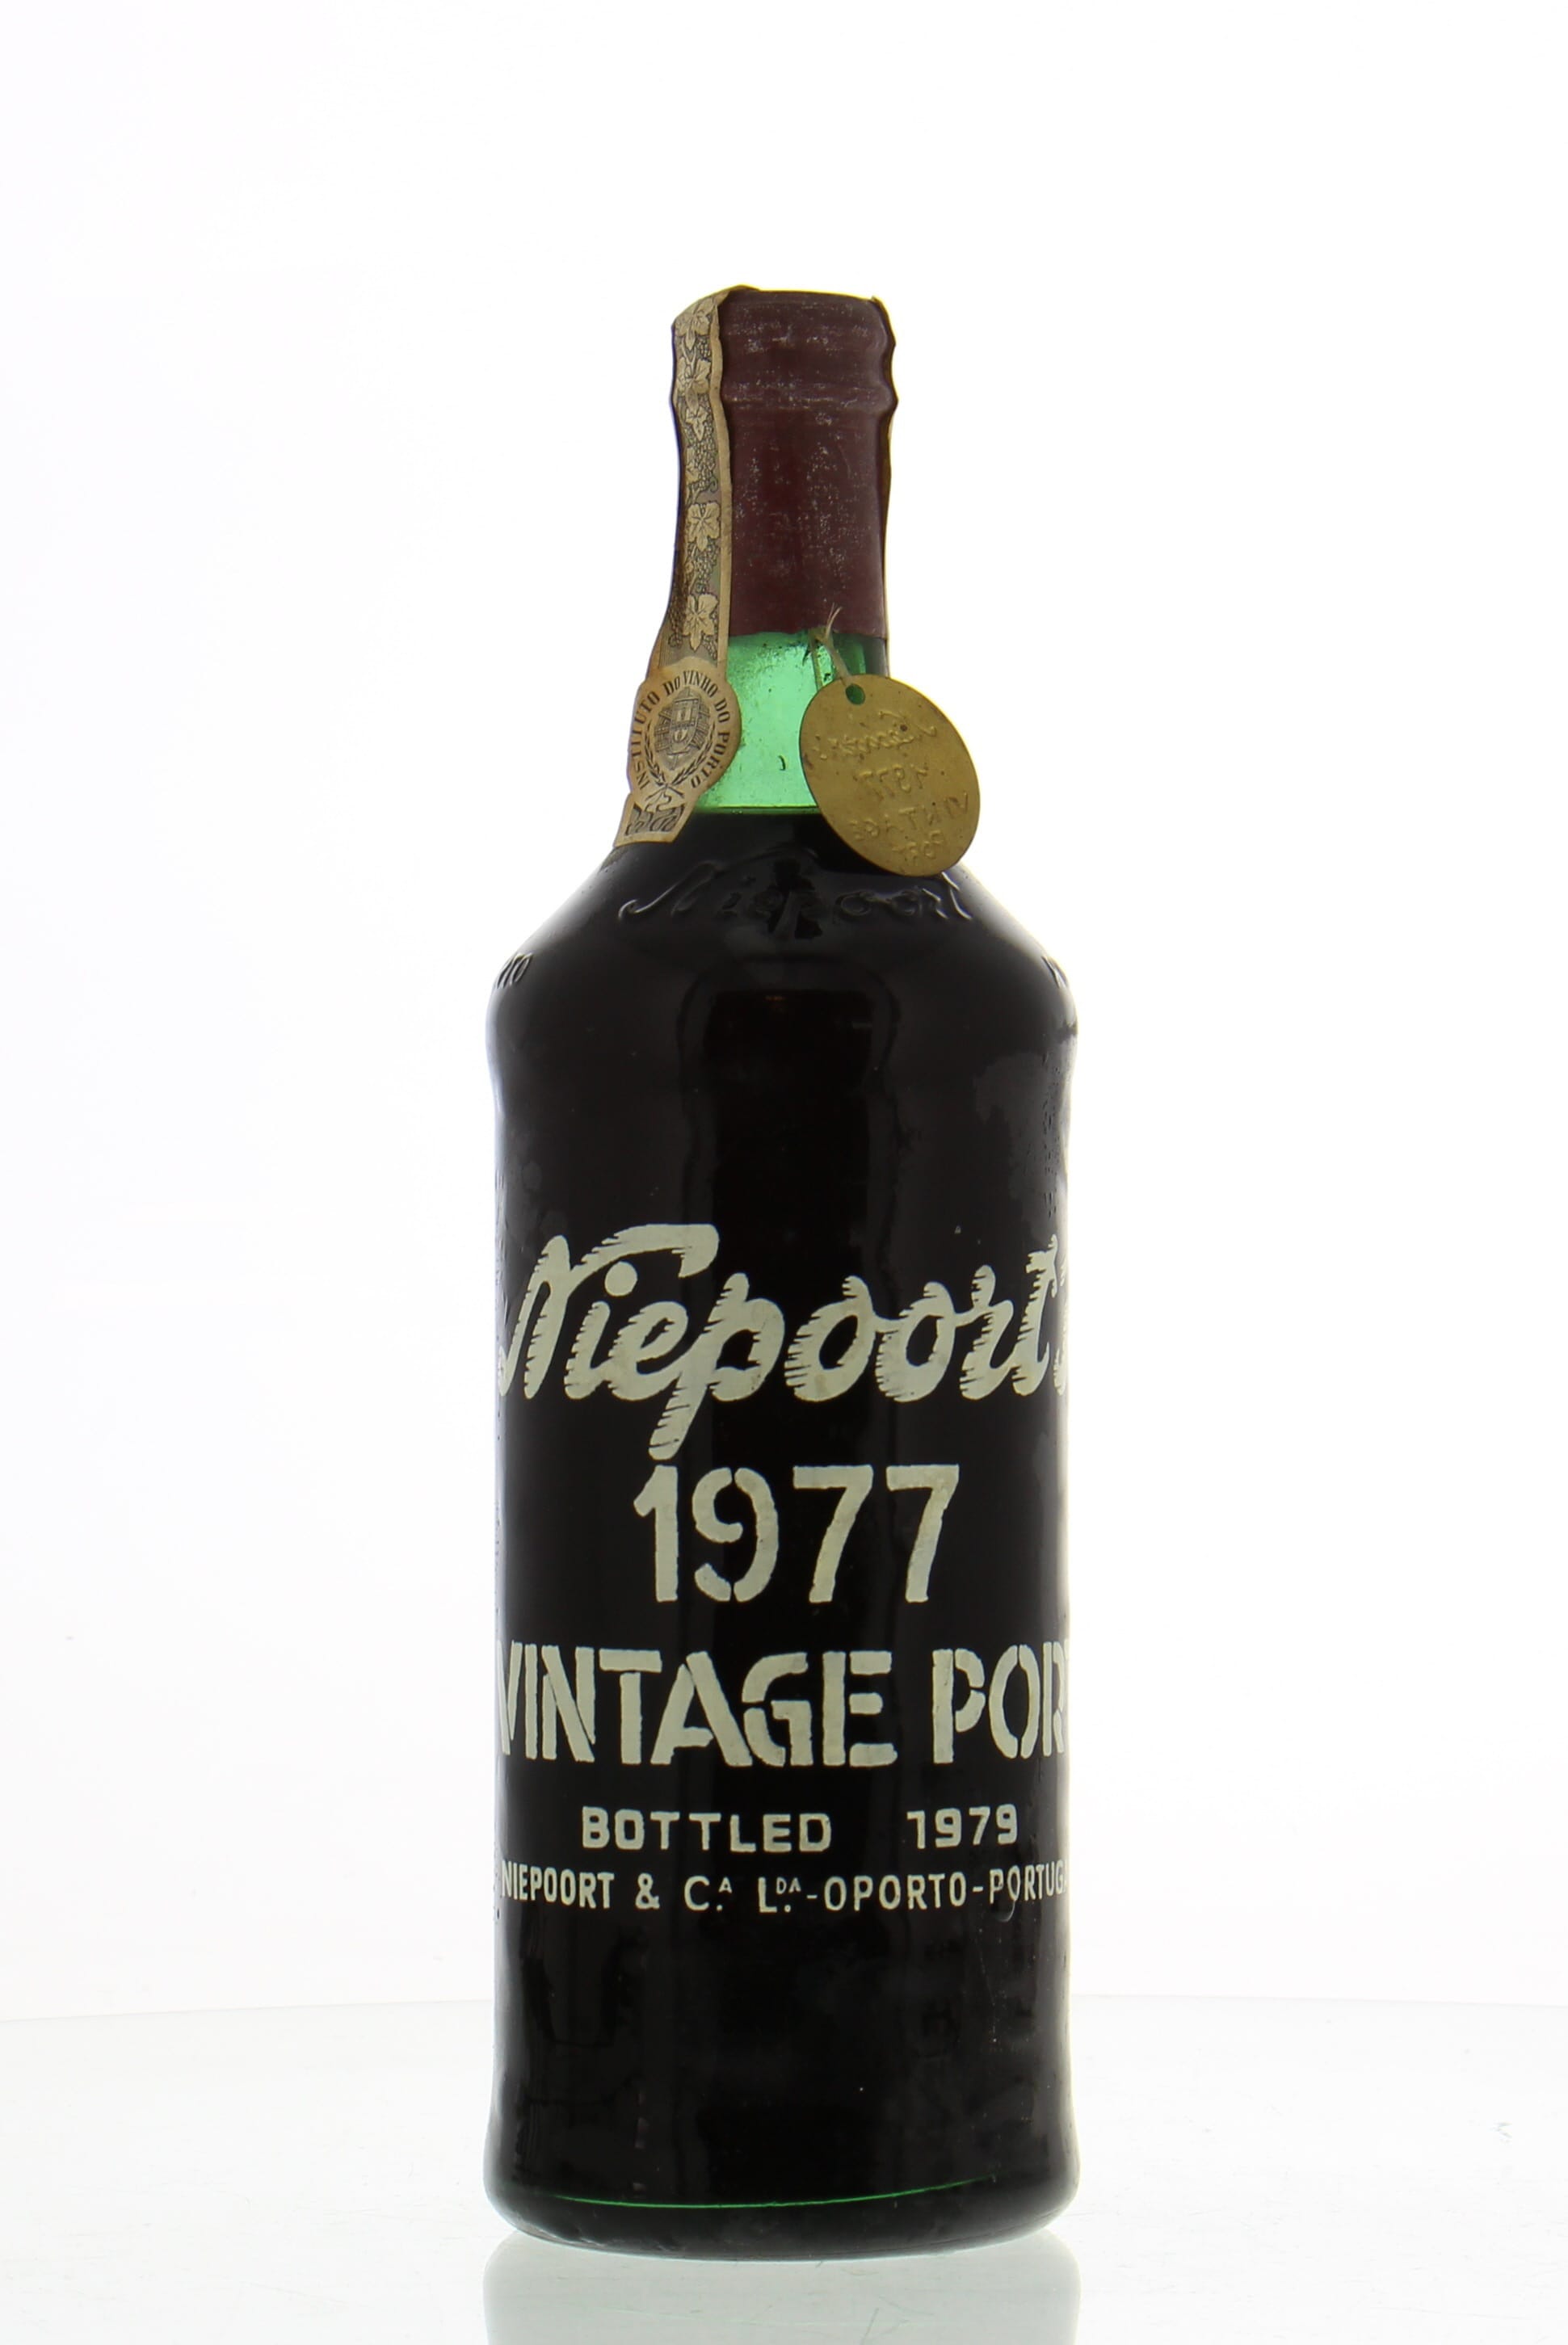 Niepoort - Vintage Port 1977